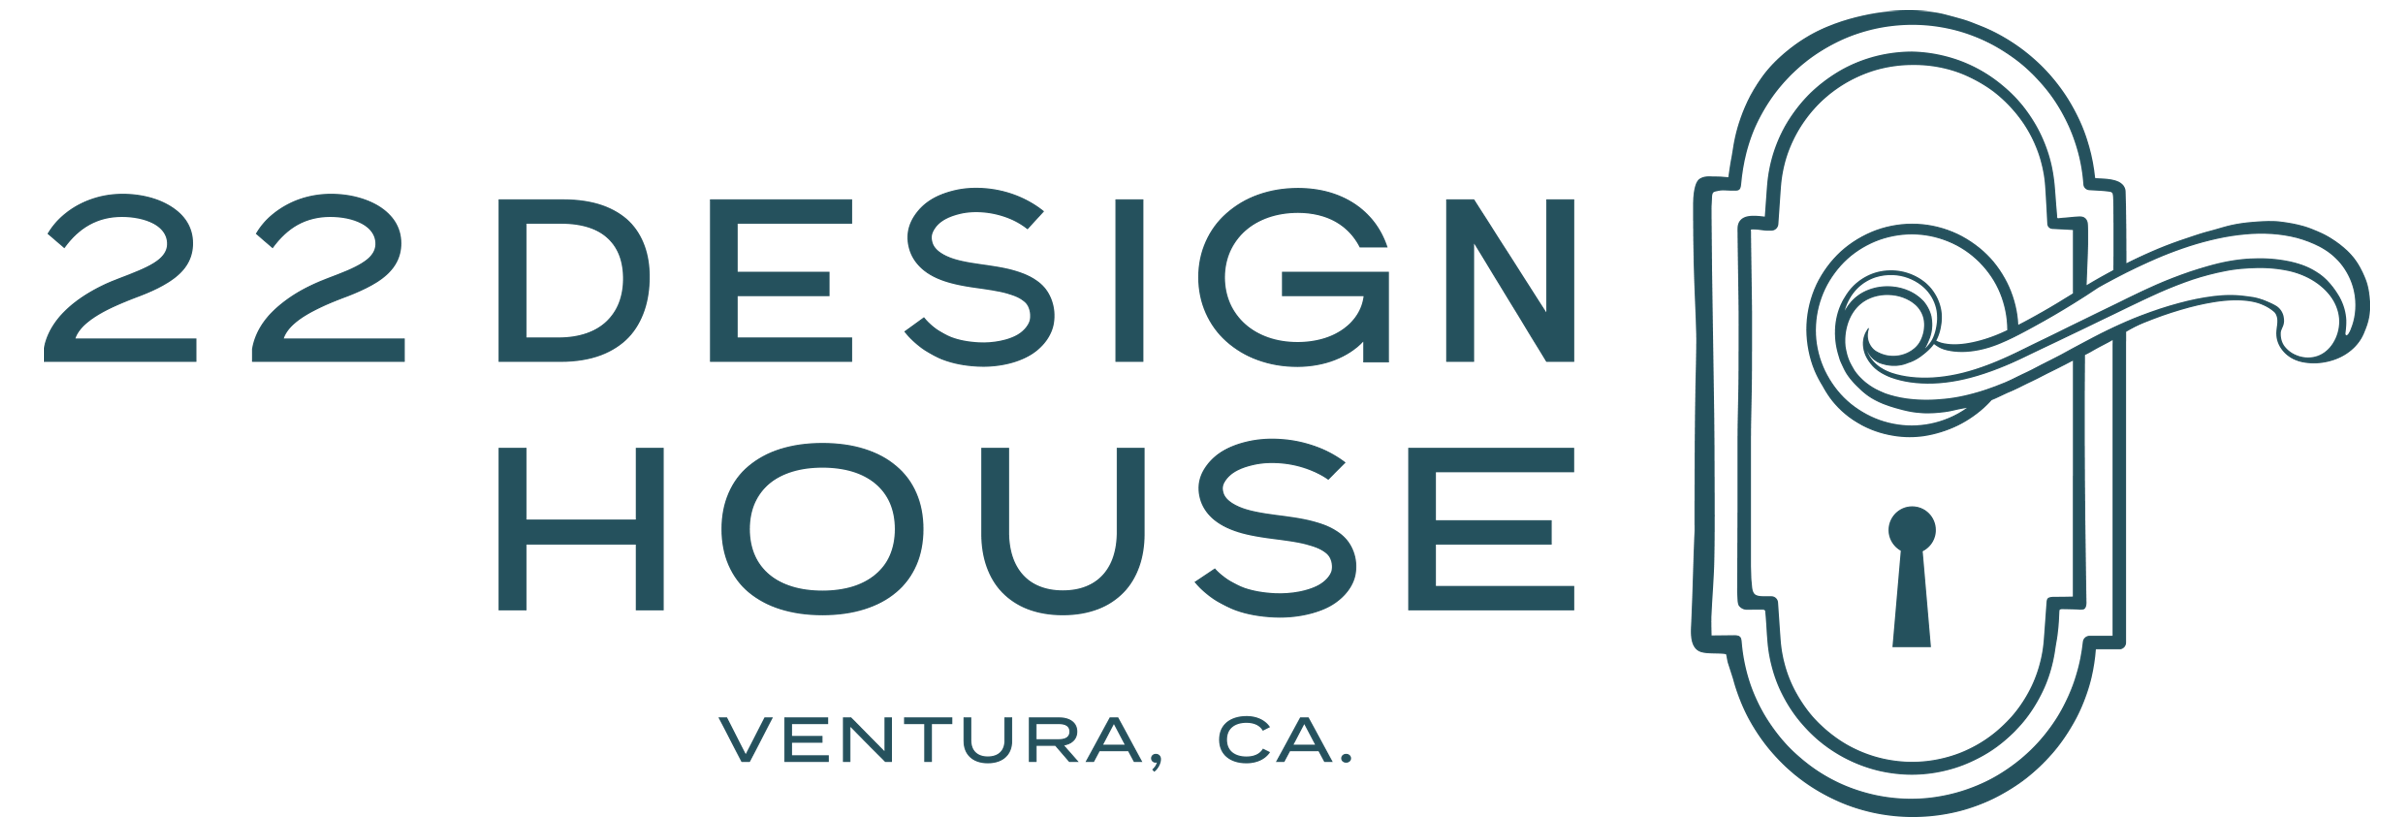 22 Design House